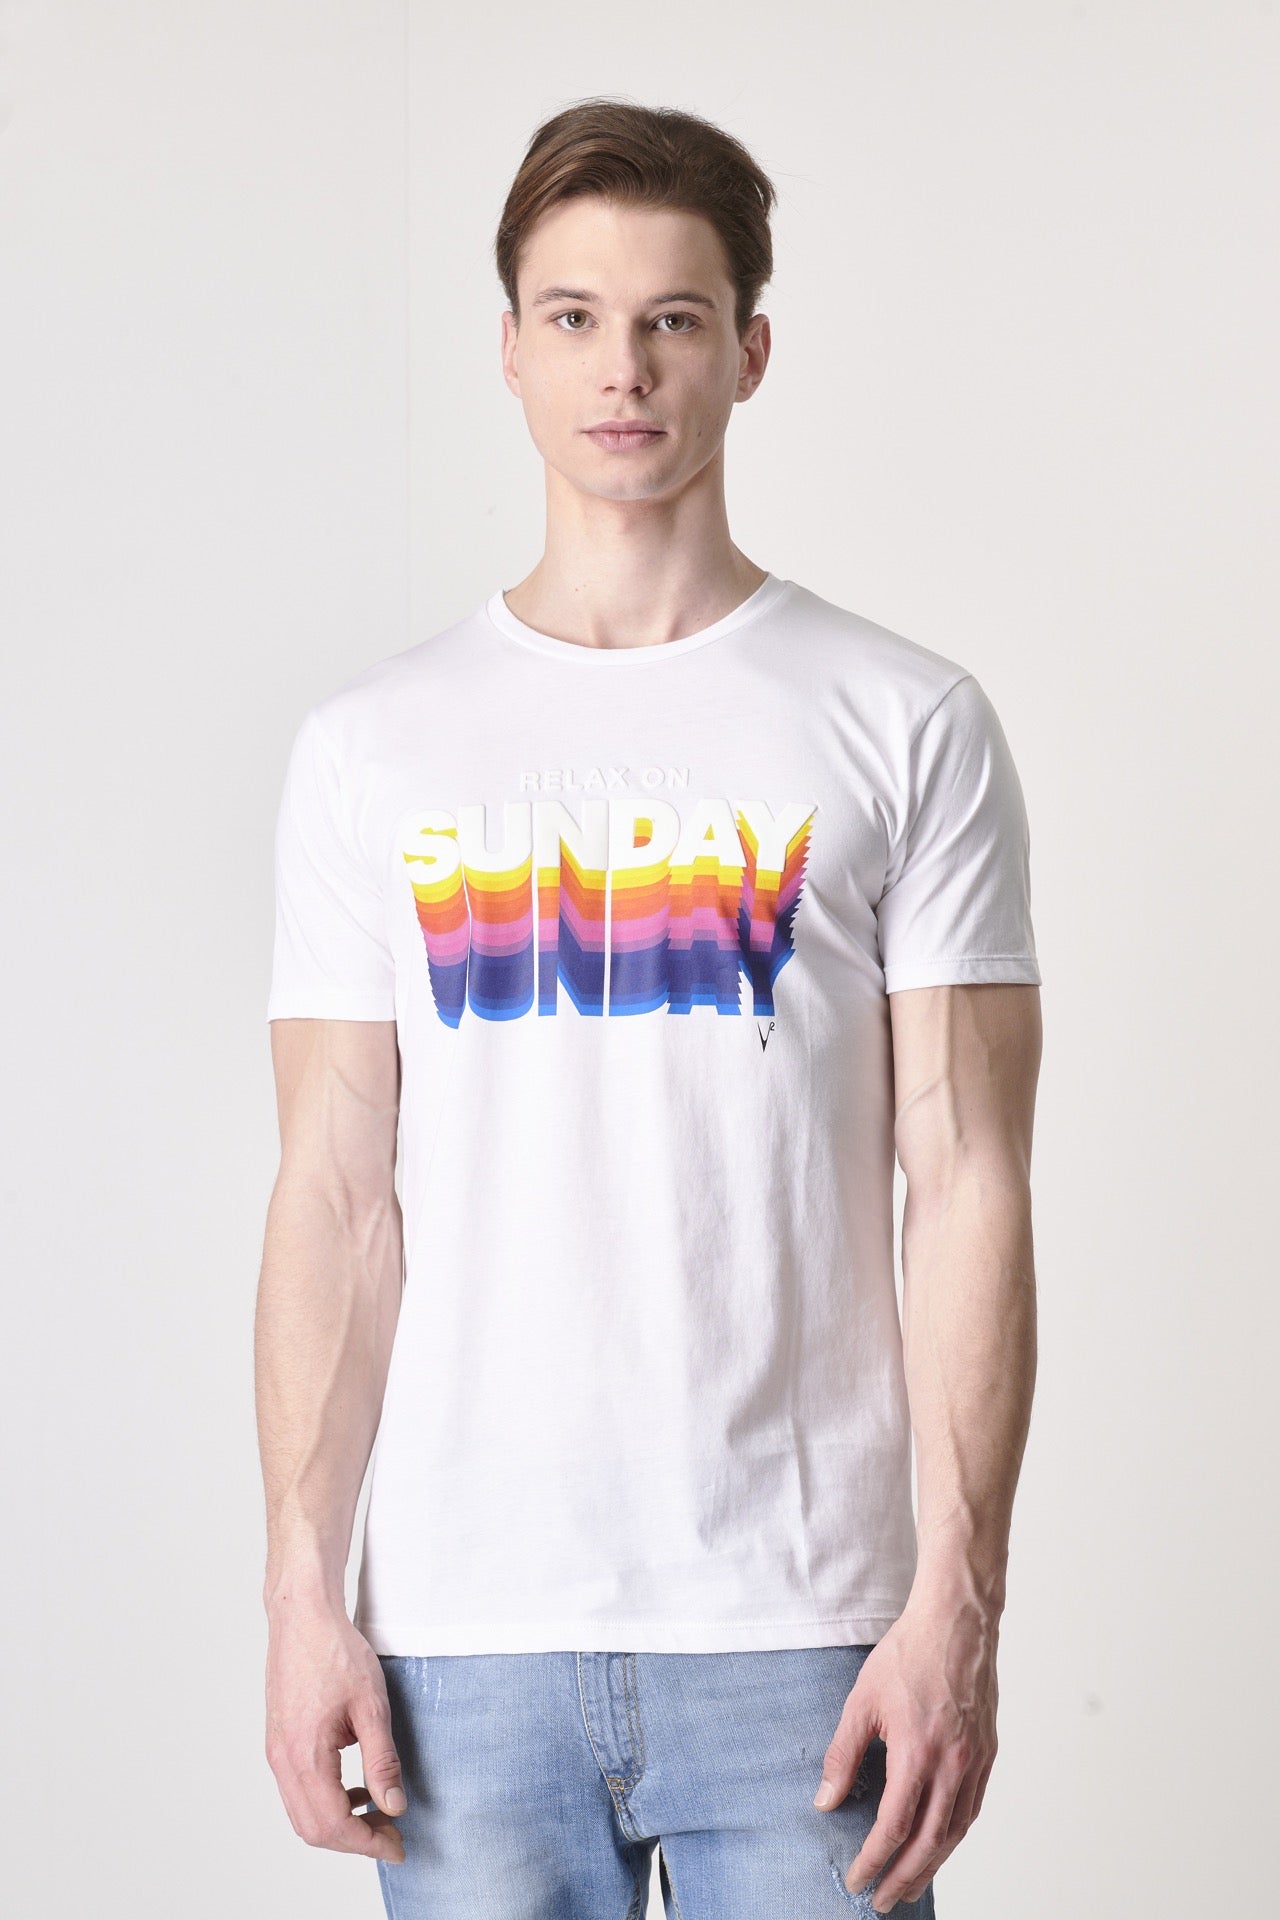 Party on Sunday White T-Shirt